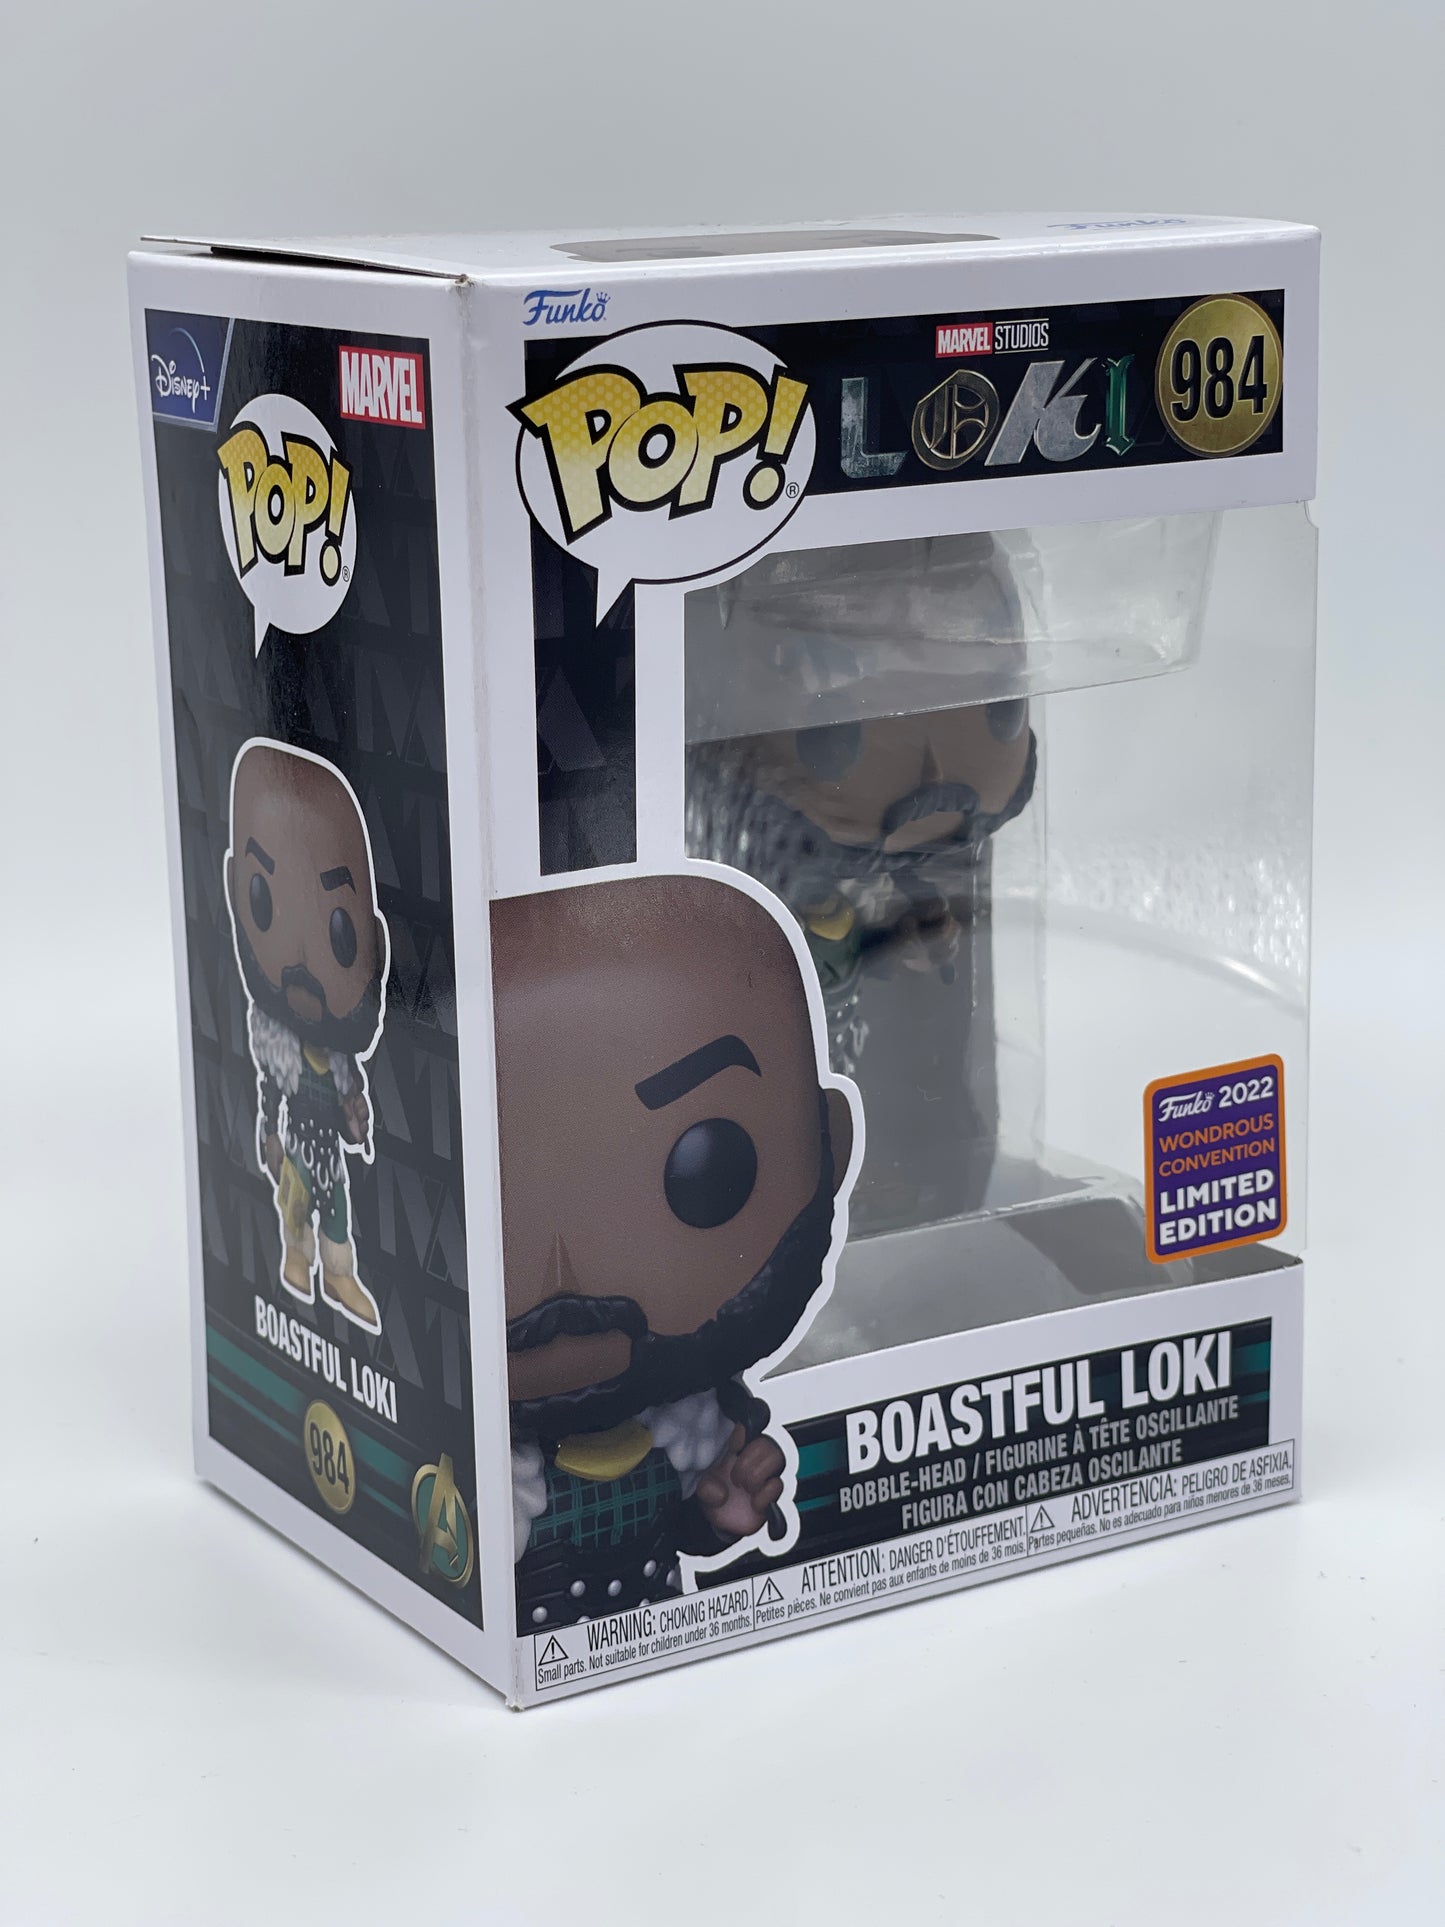 Funko Pop! "Boastful Loki" #984 Wondrous Convention Ltd. Edition Marvel Studios